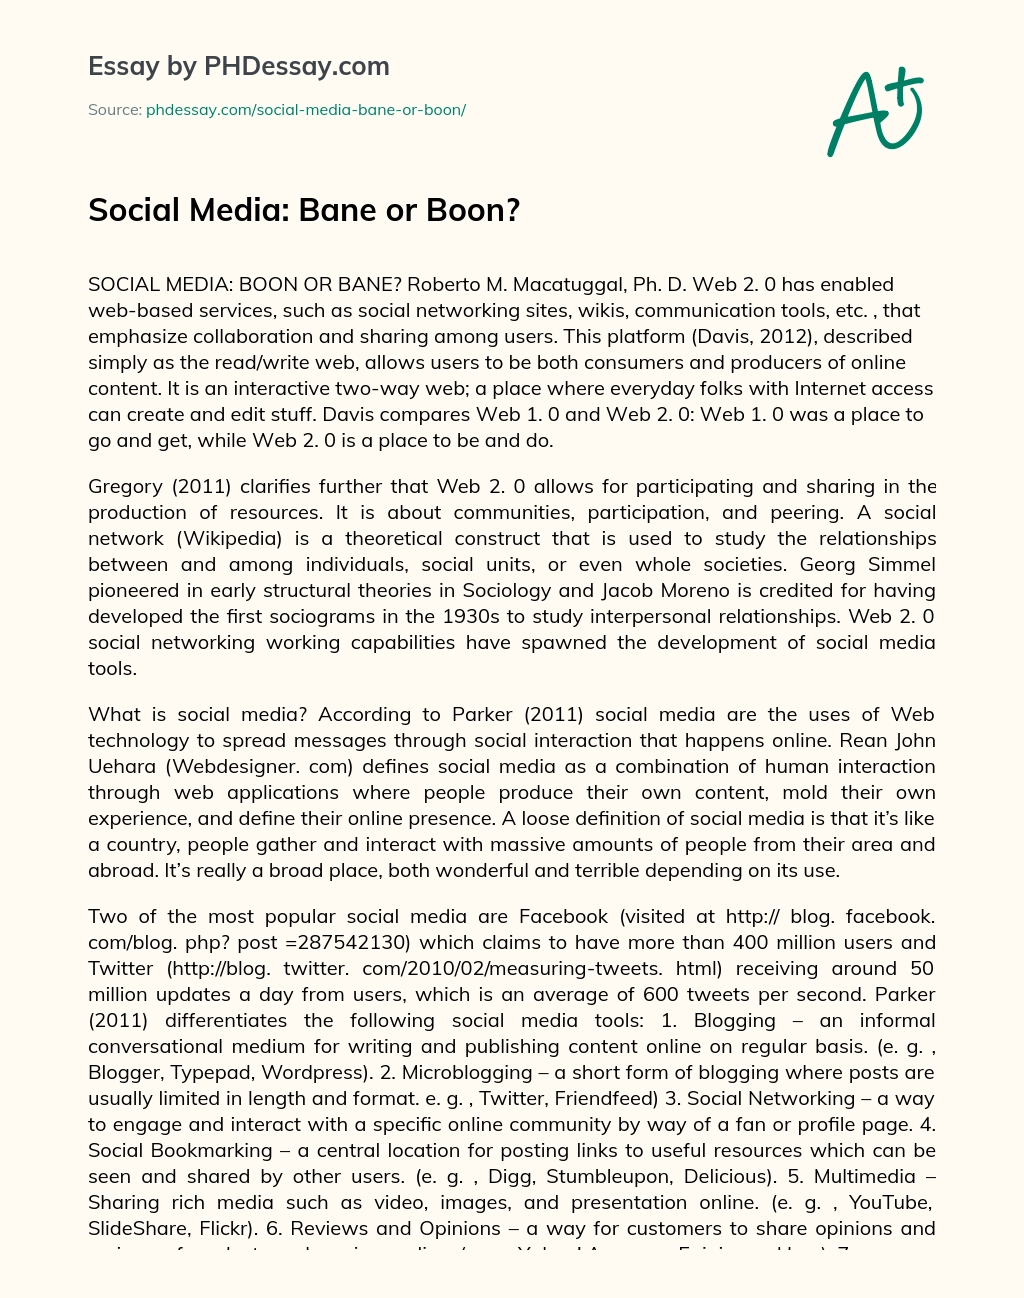 Social Media: Bane or Boon? essay